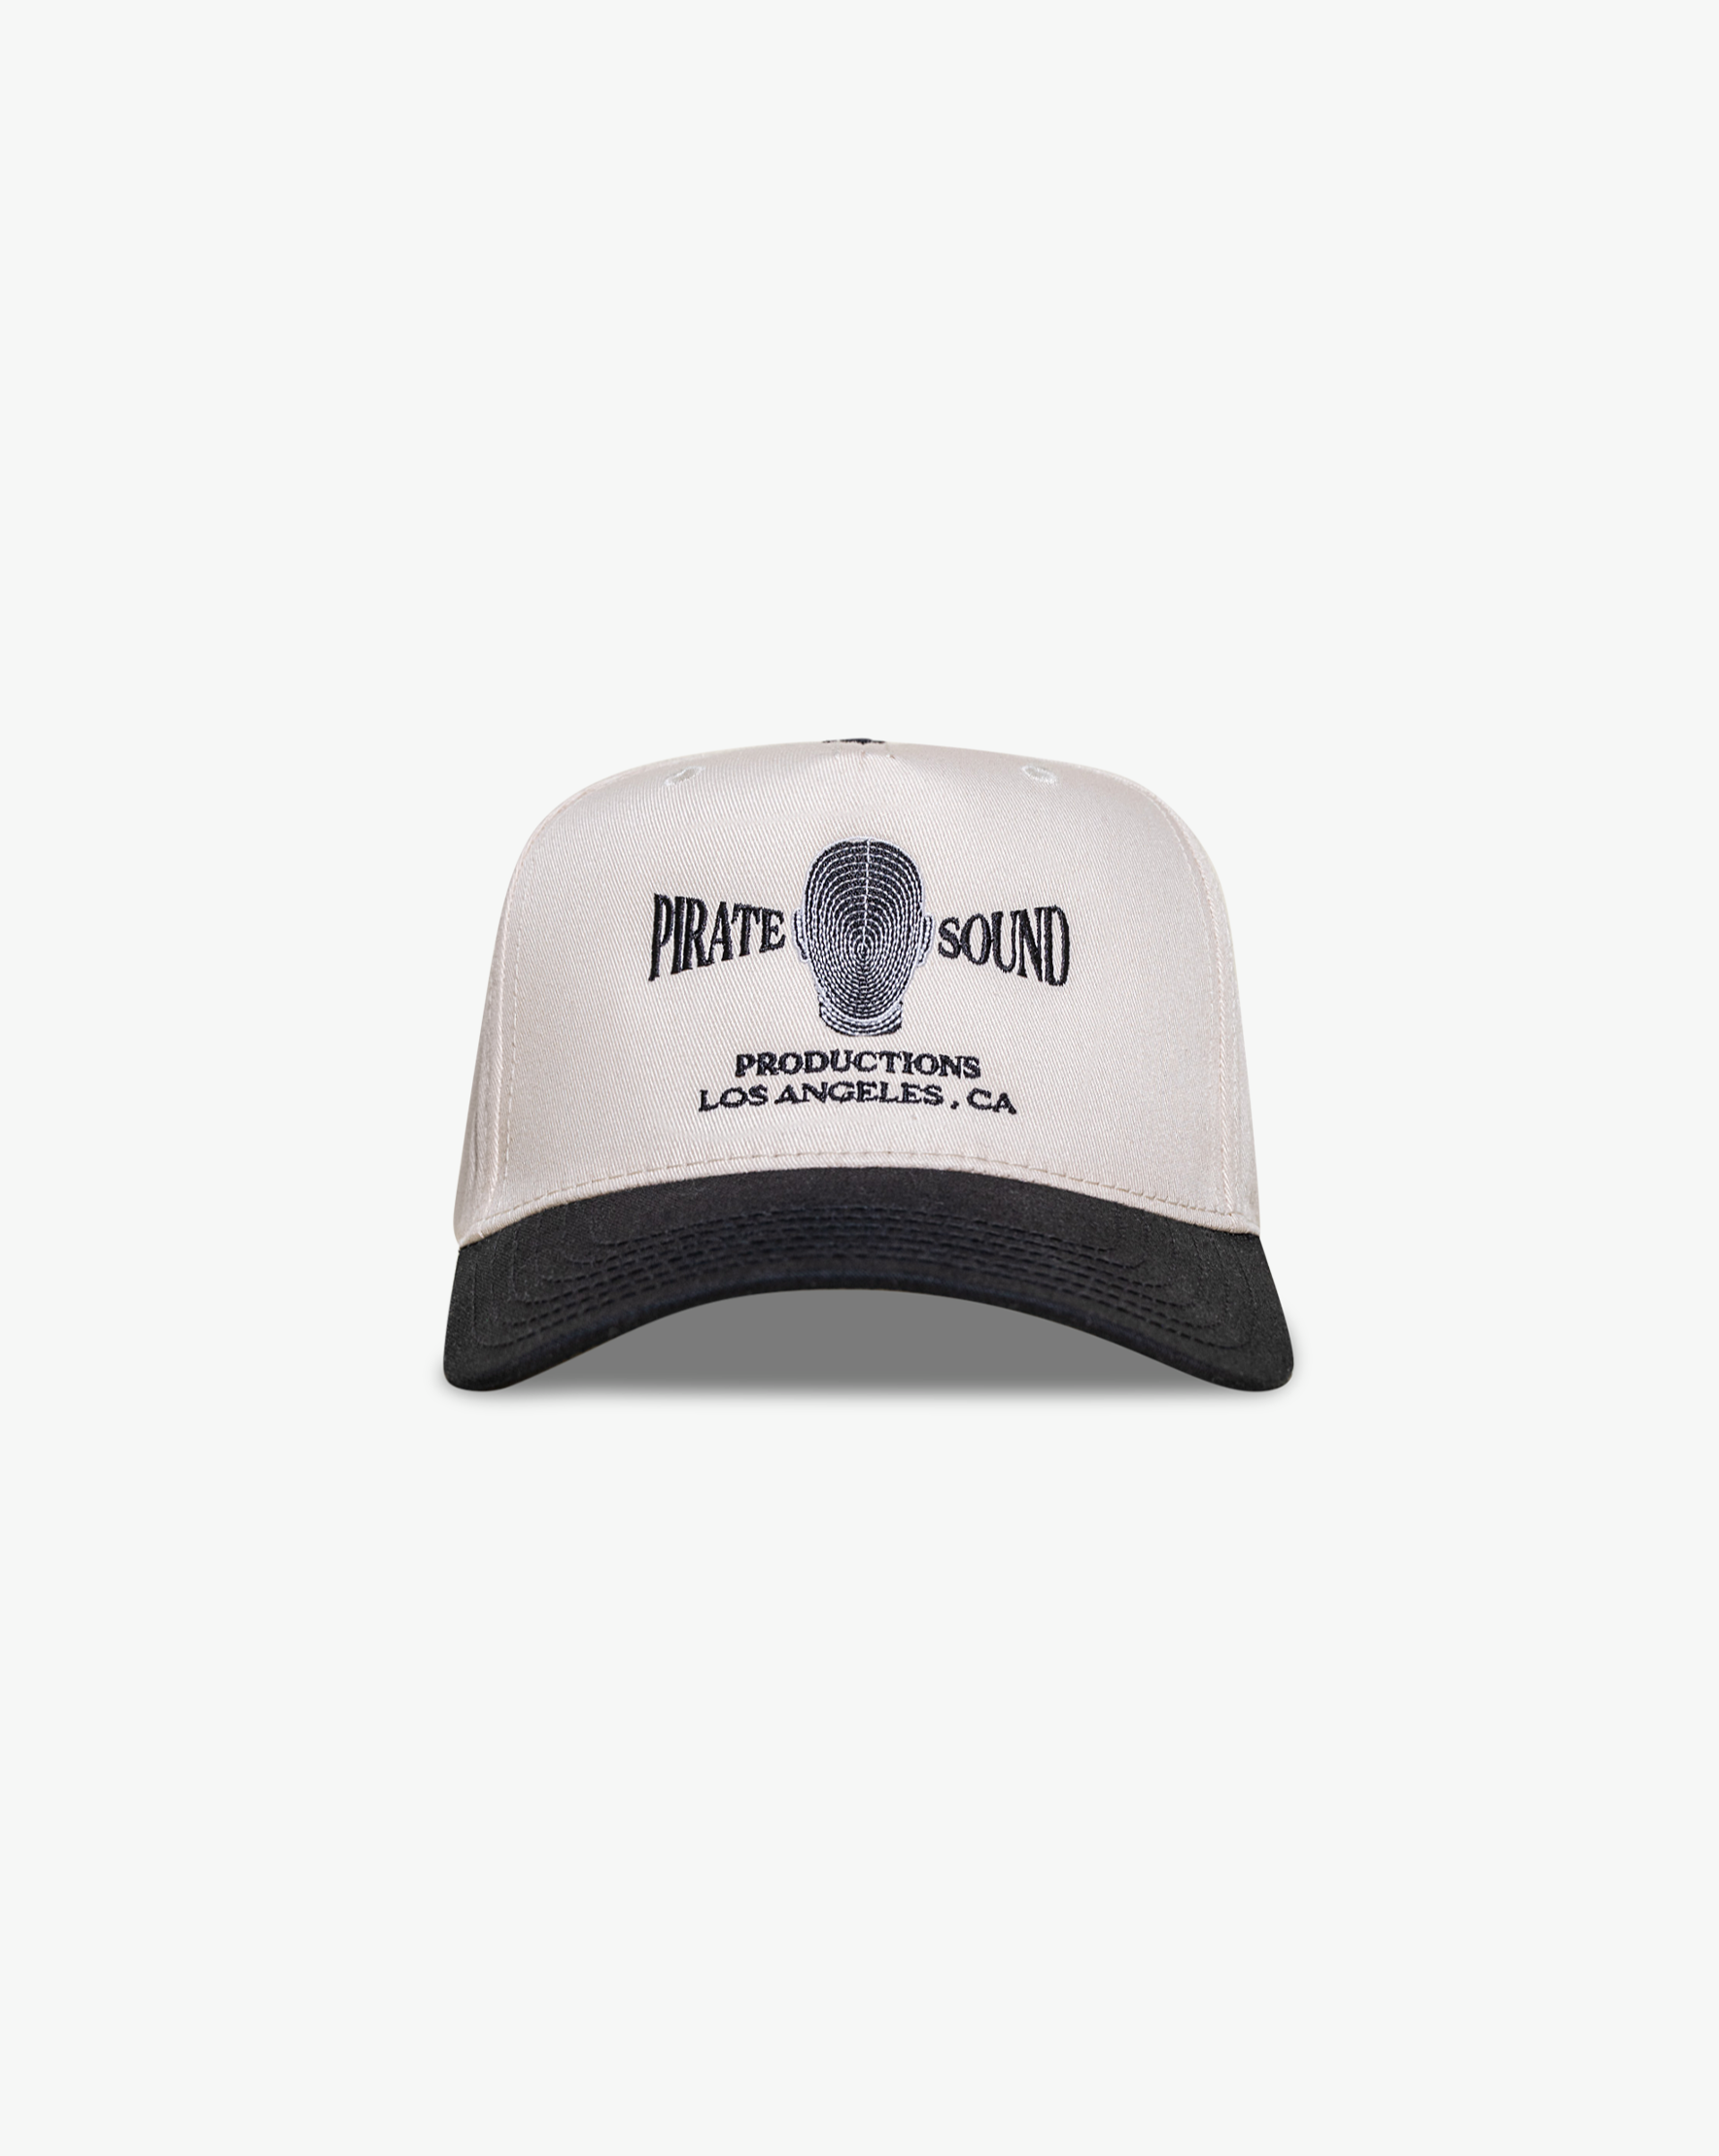 Pirate Sound Productions Hat (Cream/Black .WAV Edition)